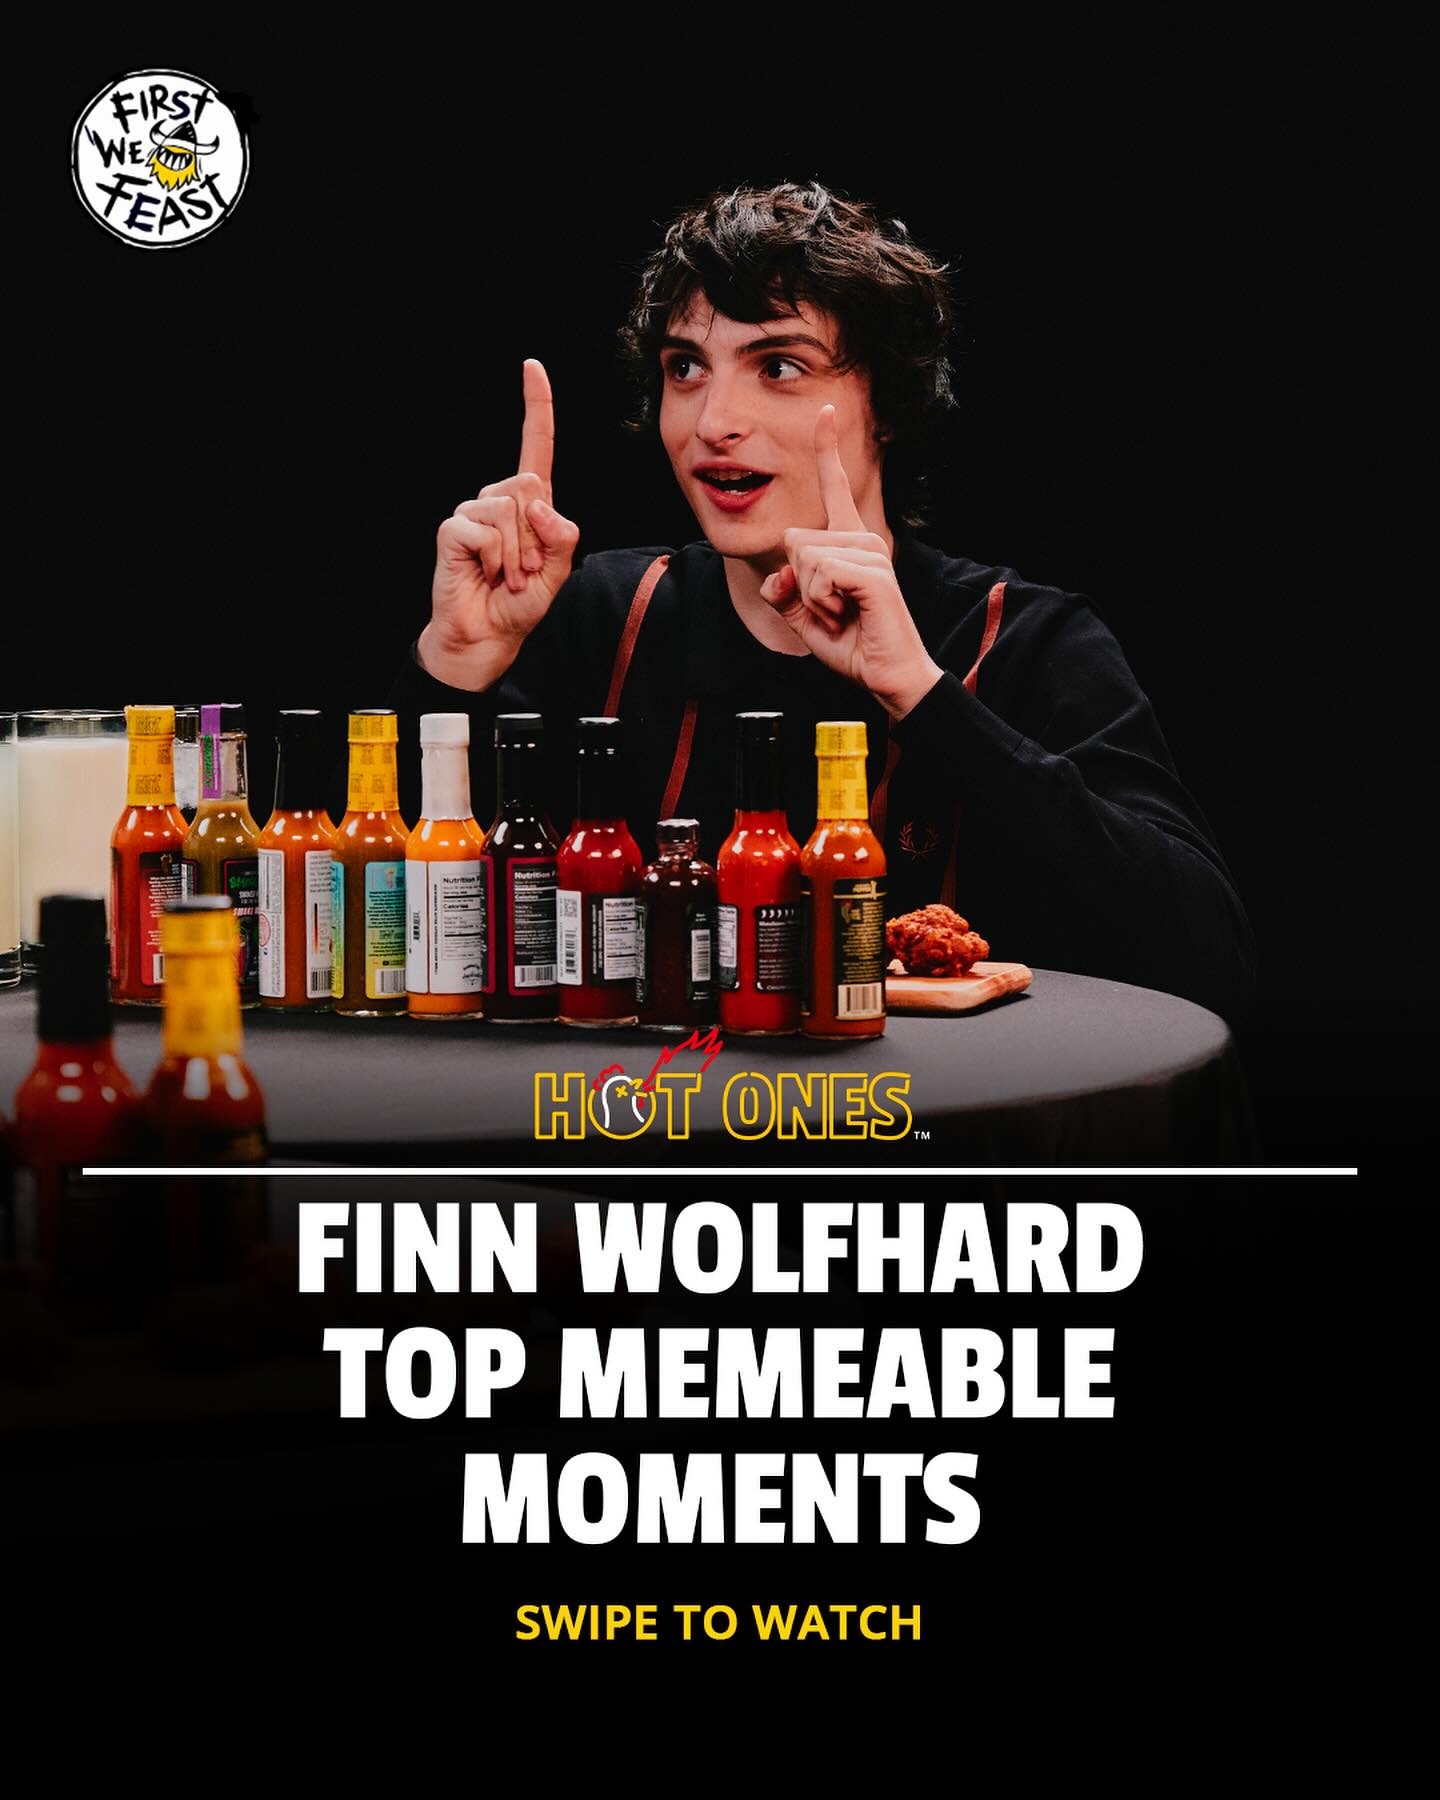 General photo of Finn Wolfhard